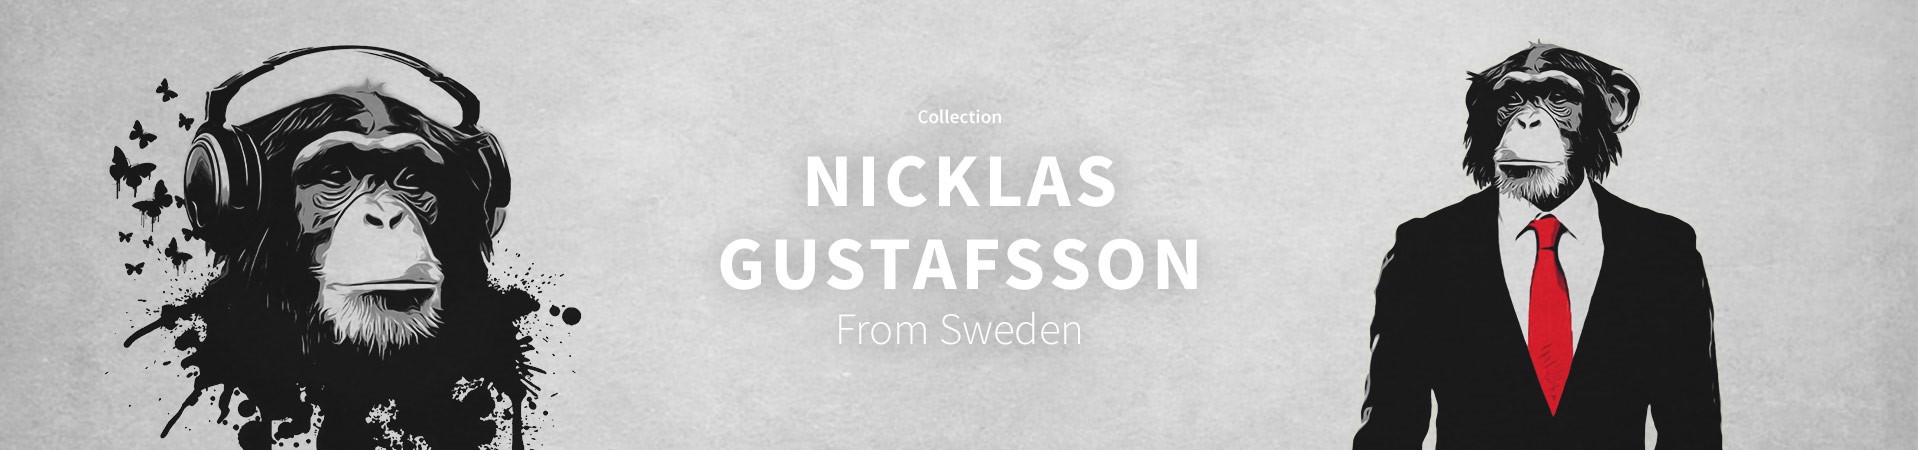 Nicklas Gustafsson